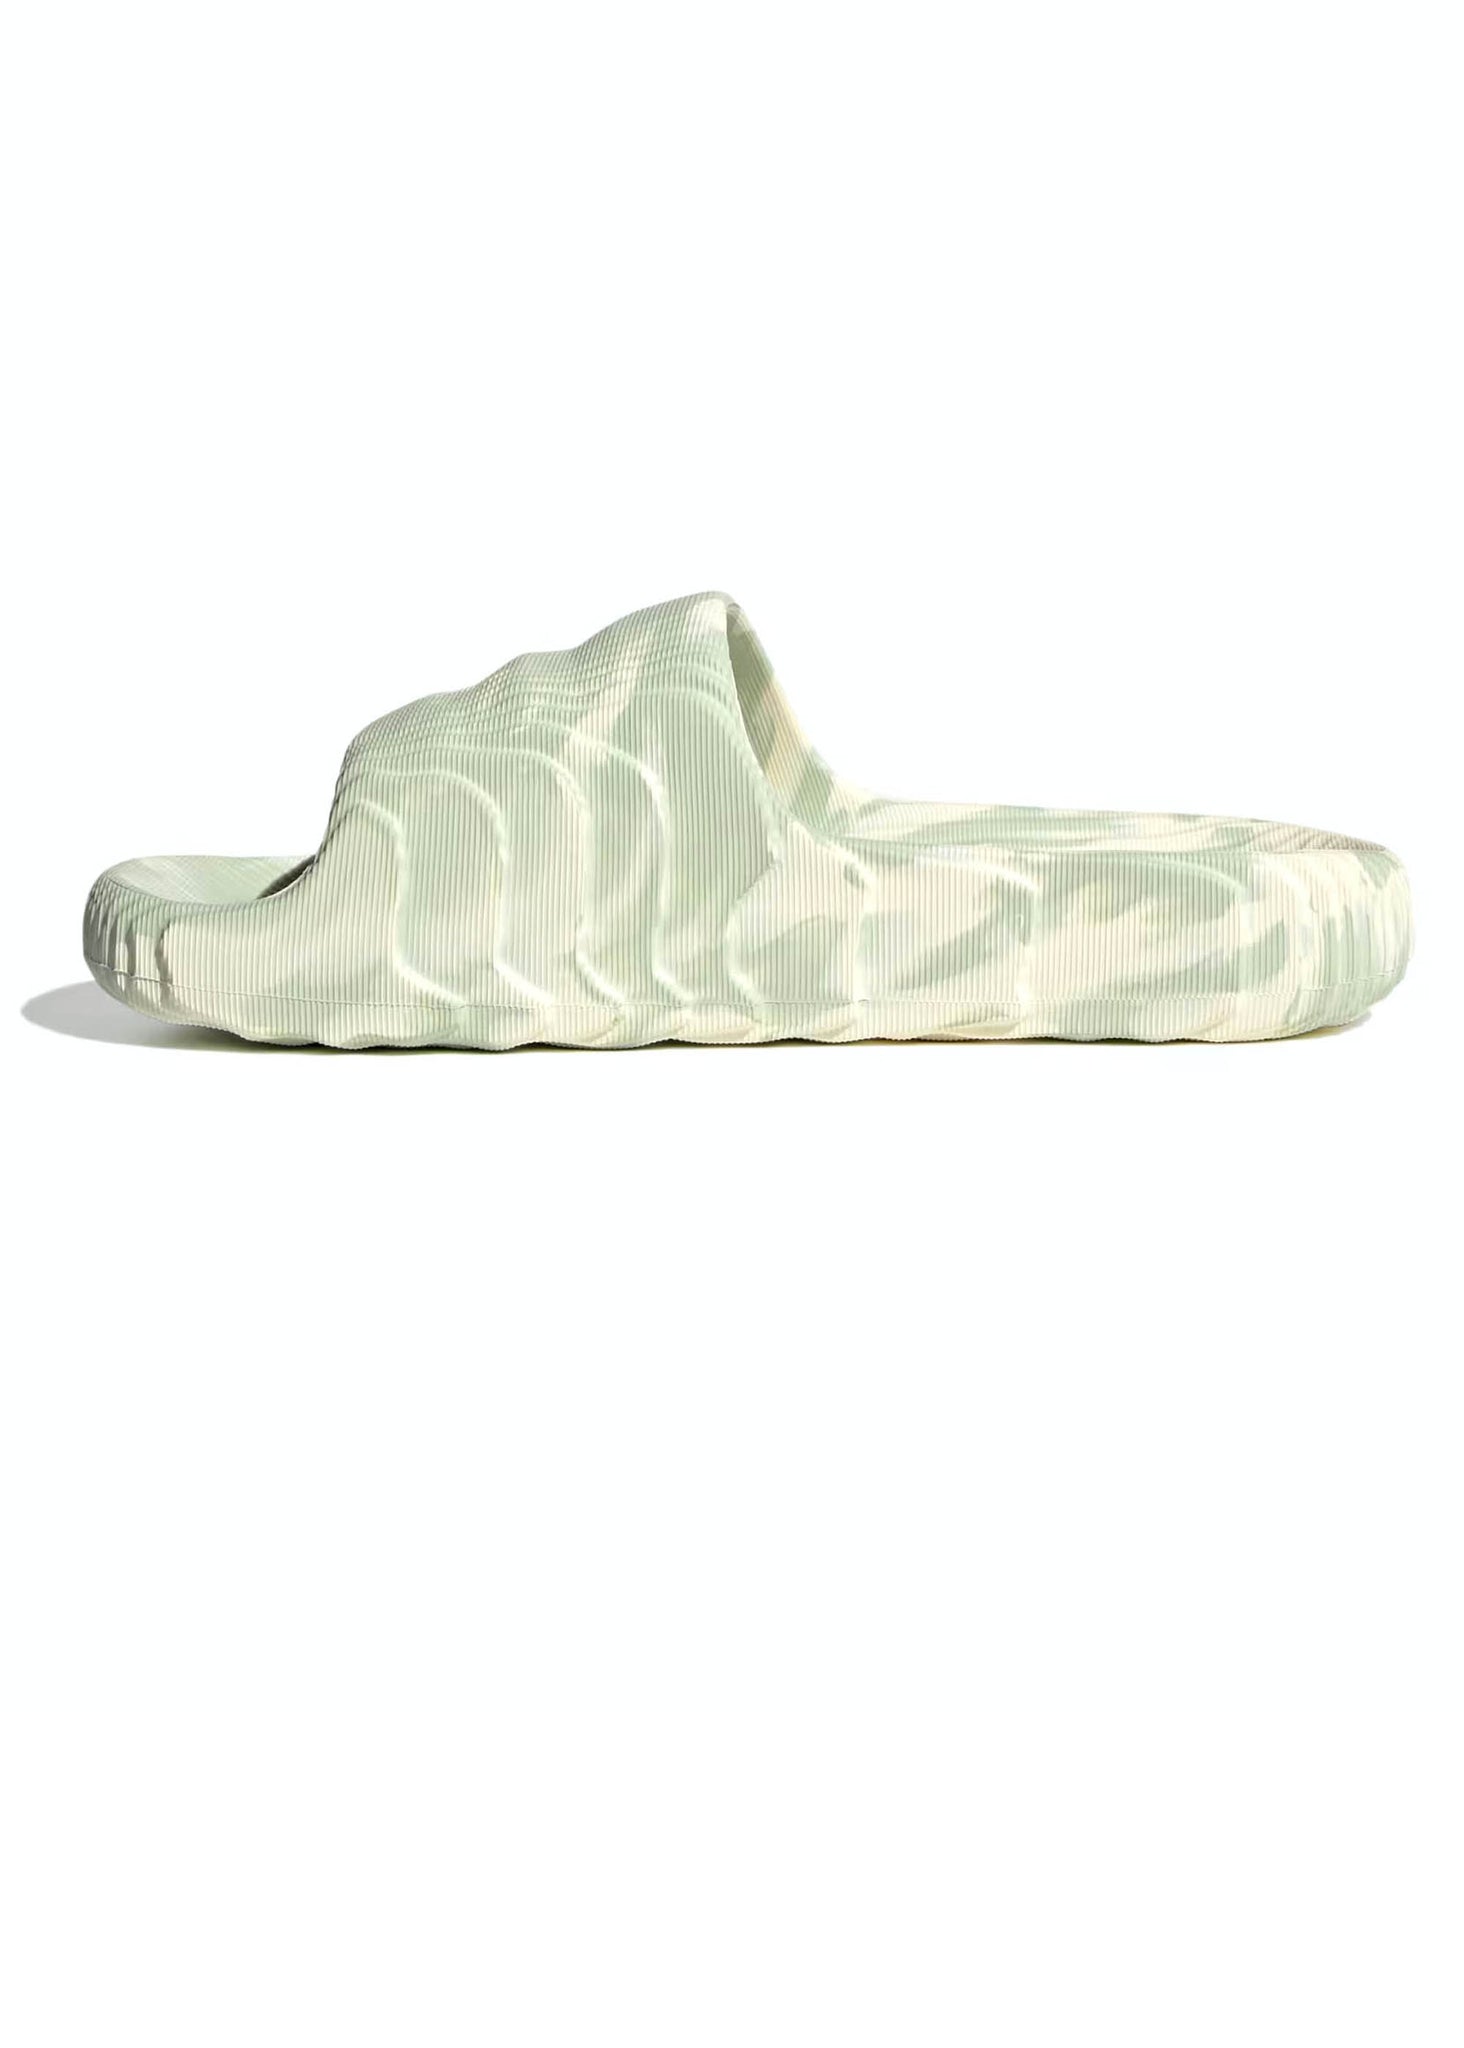 Adilettes 22 Sliders - Cream White/Green